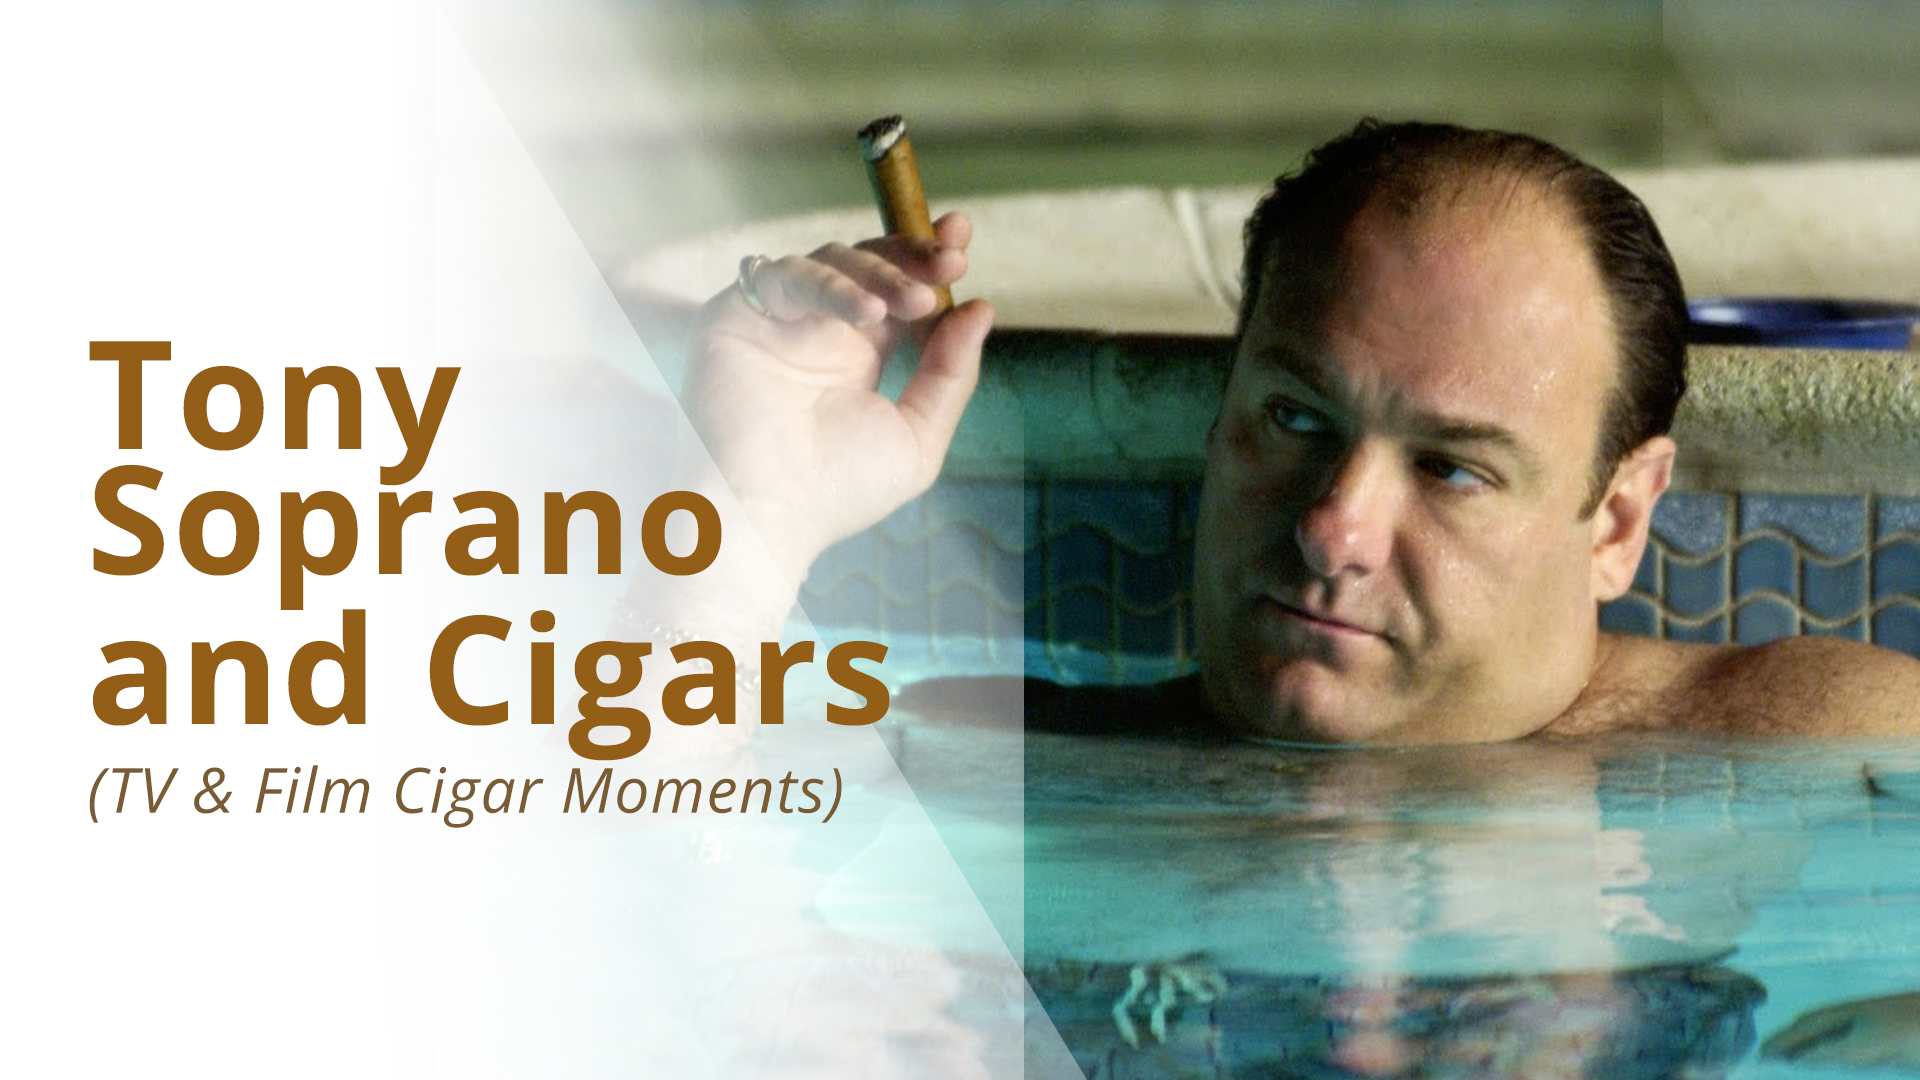 What cigars did famous mob boss Tony Soprano smoke